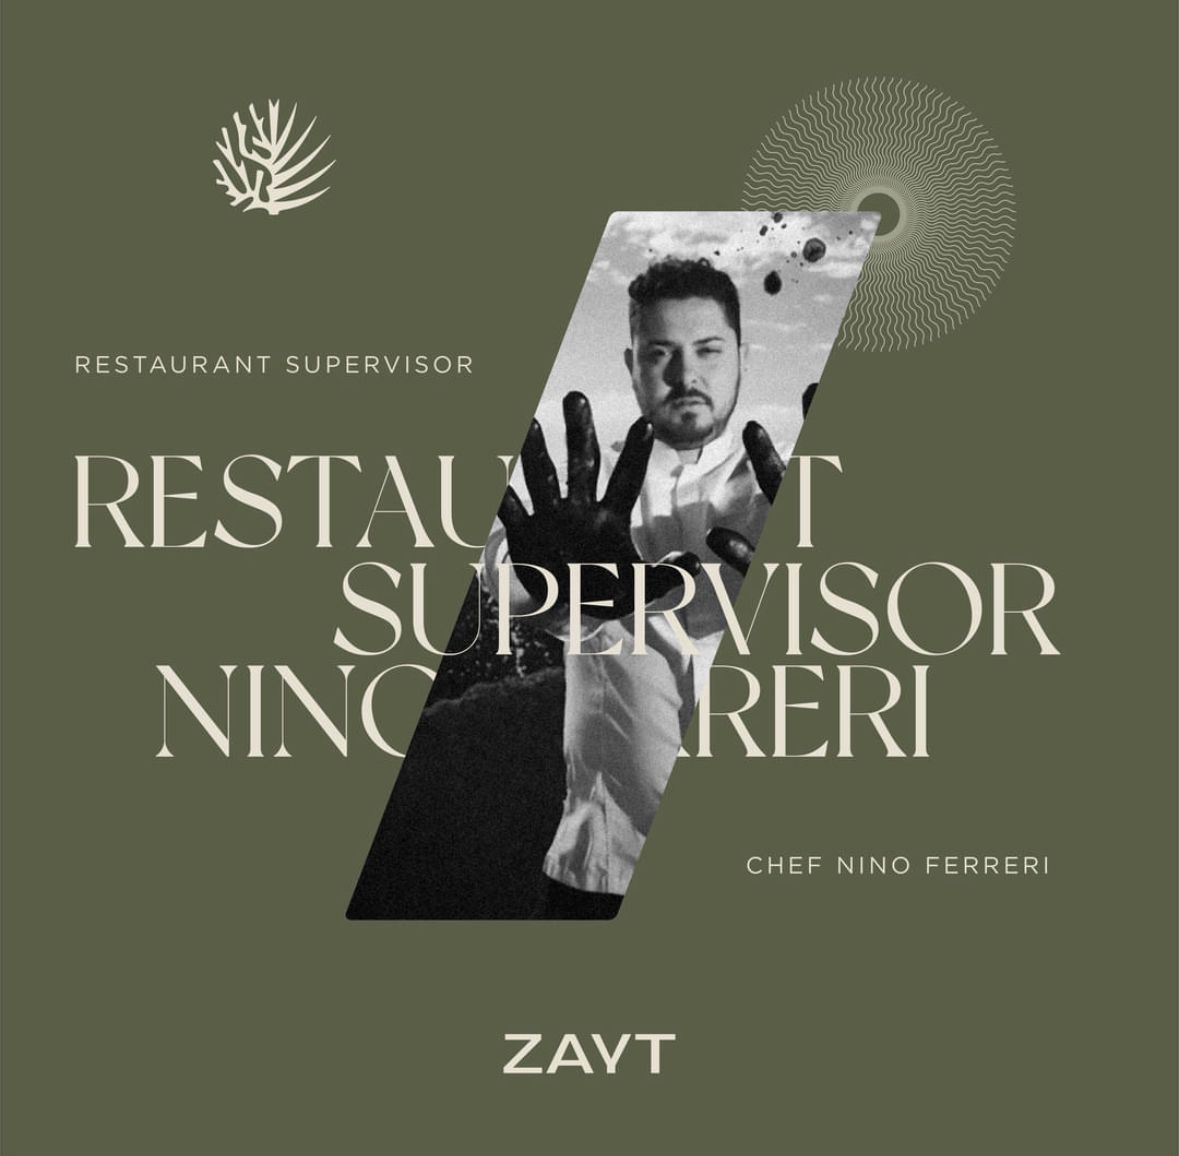 Ignazio Morgante - Chef Resident - 
Nino Ferreri - Chef Supervisor